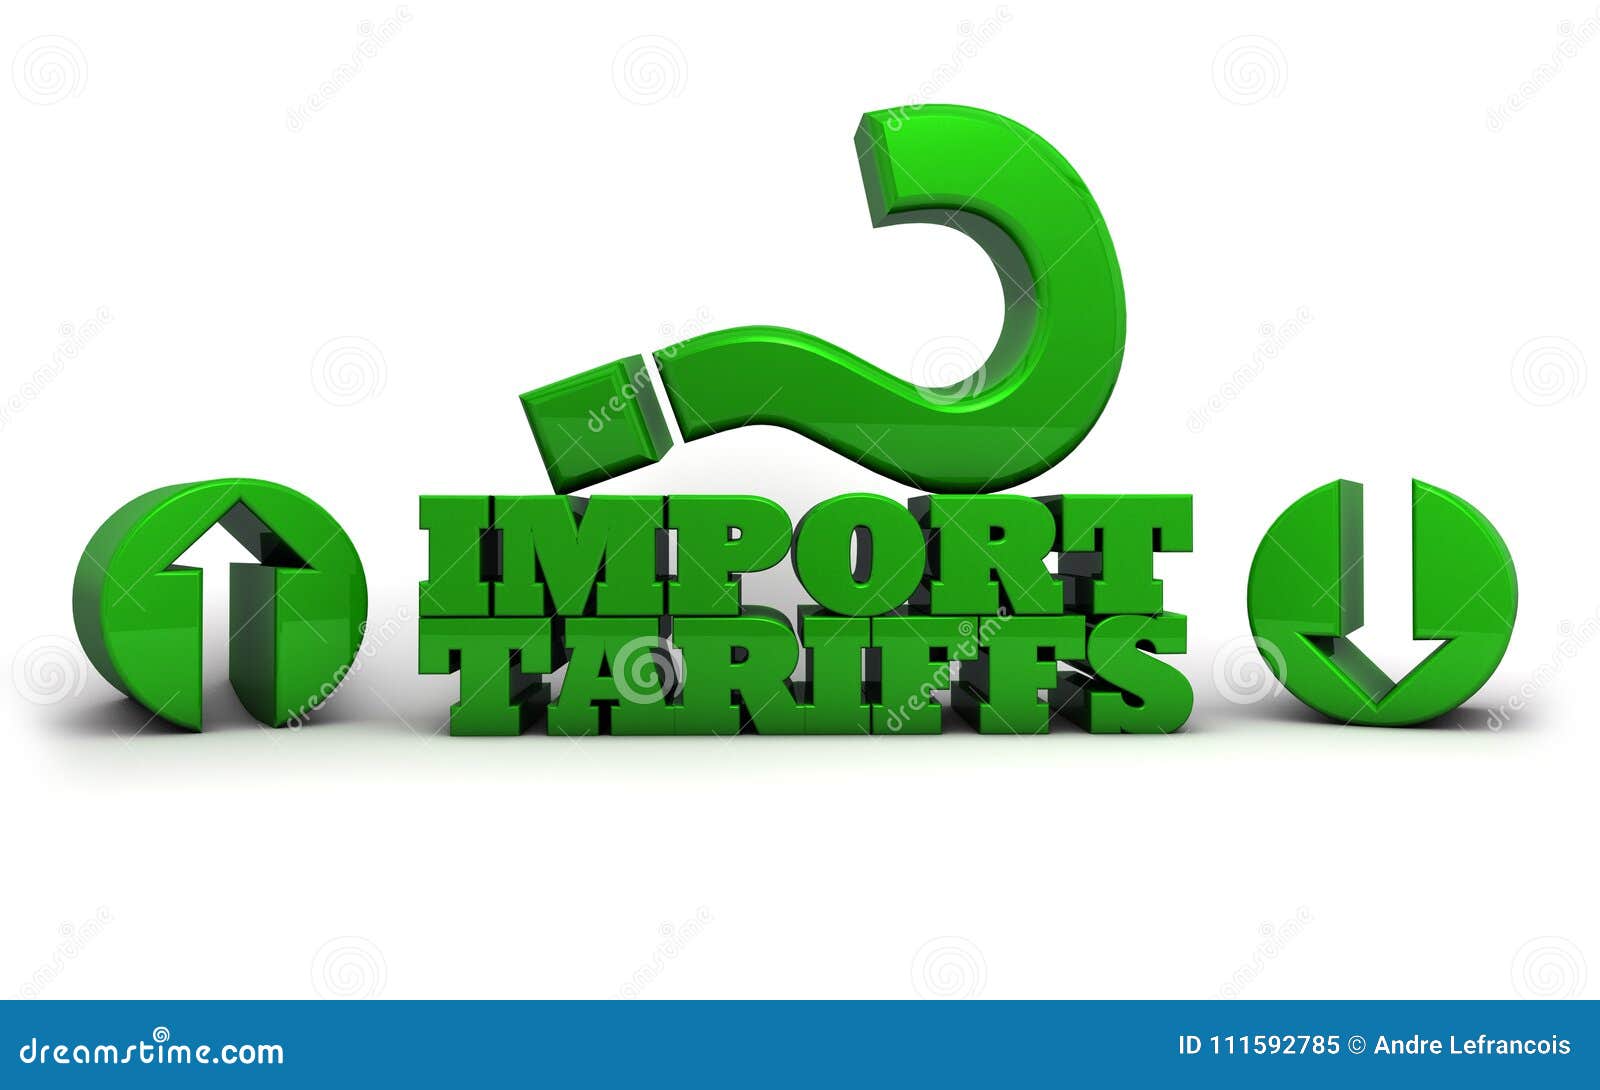 import tariffs and trade wars